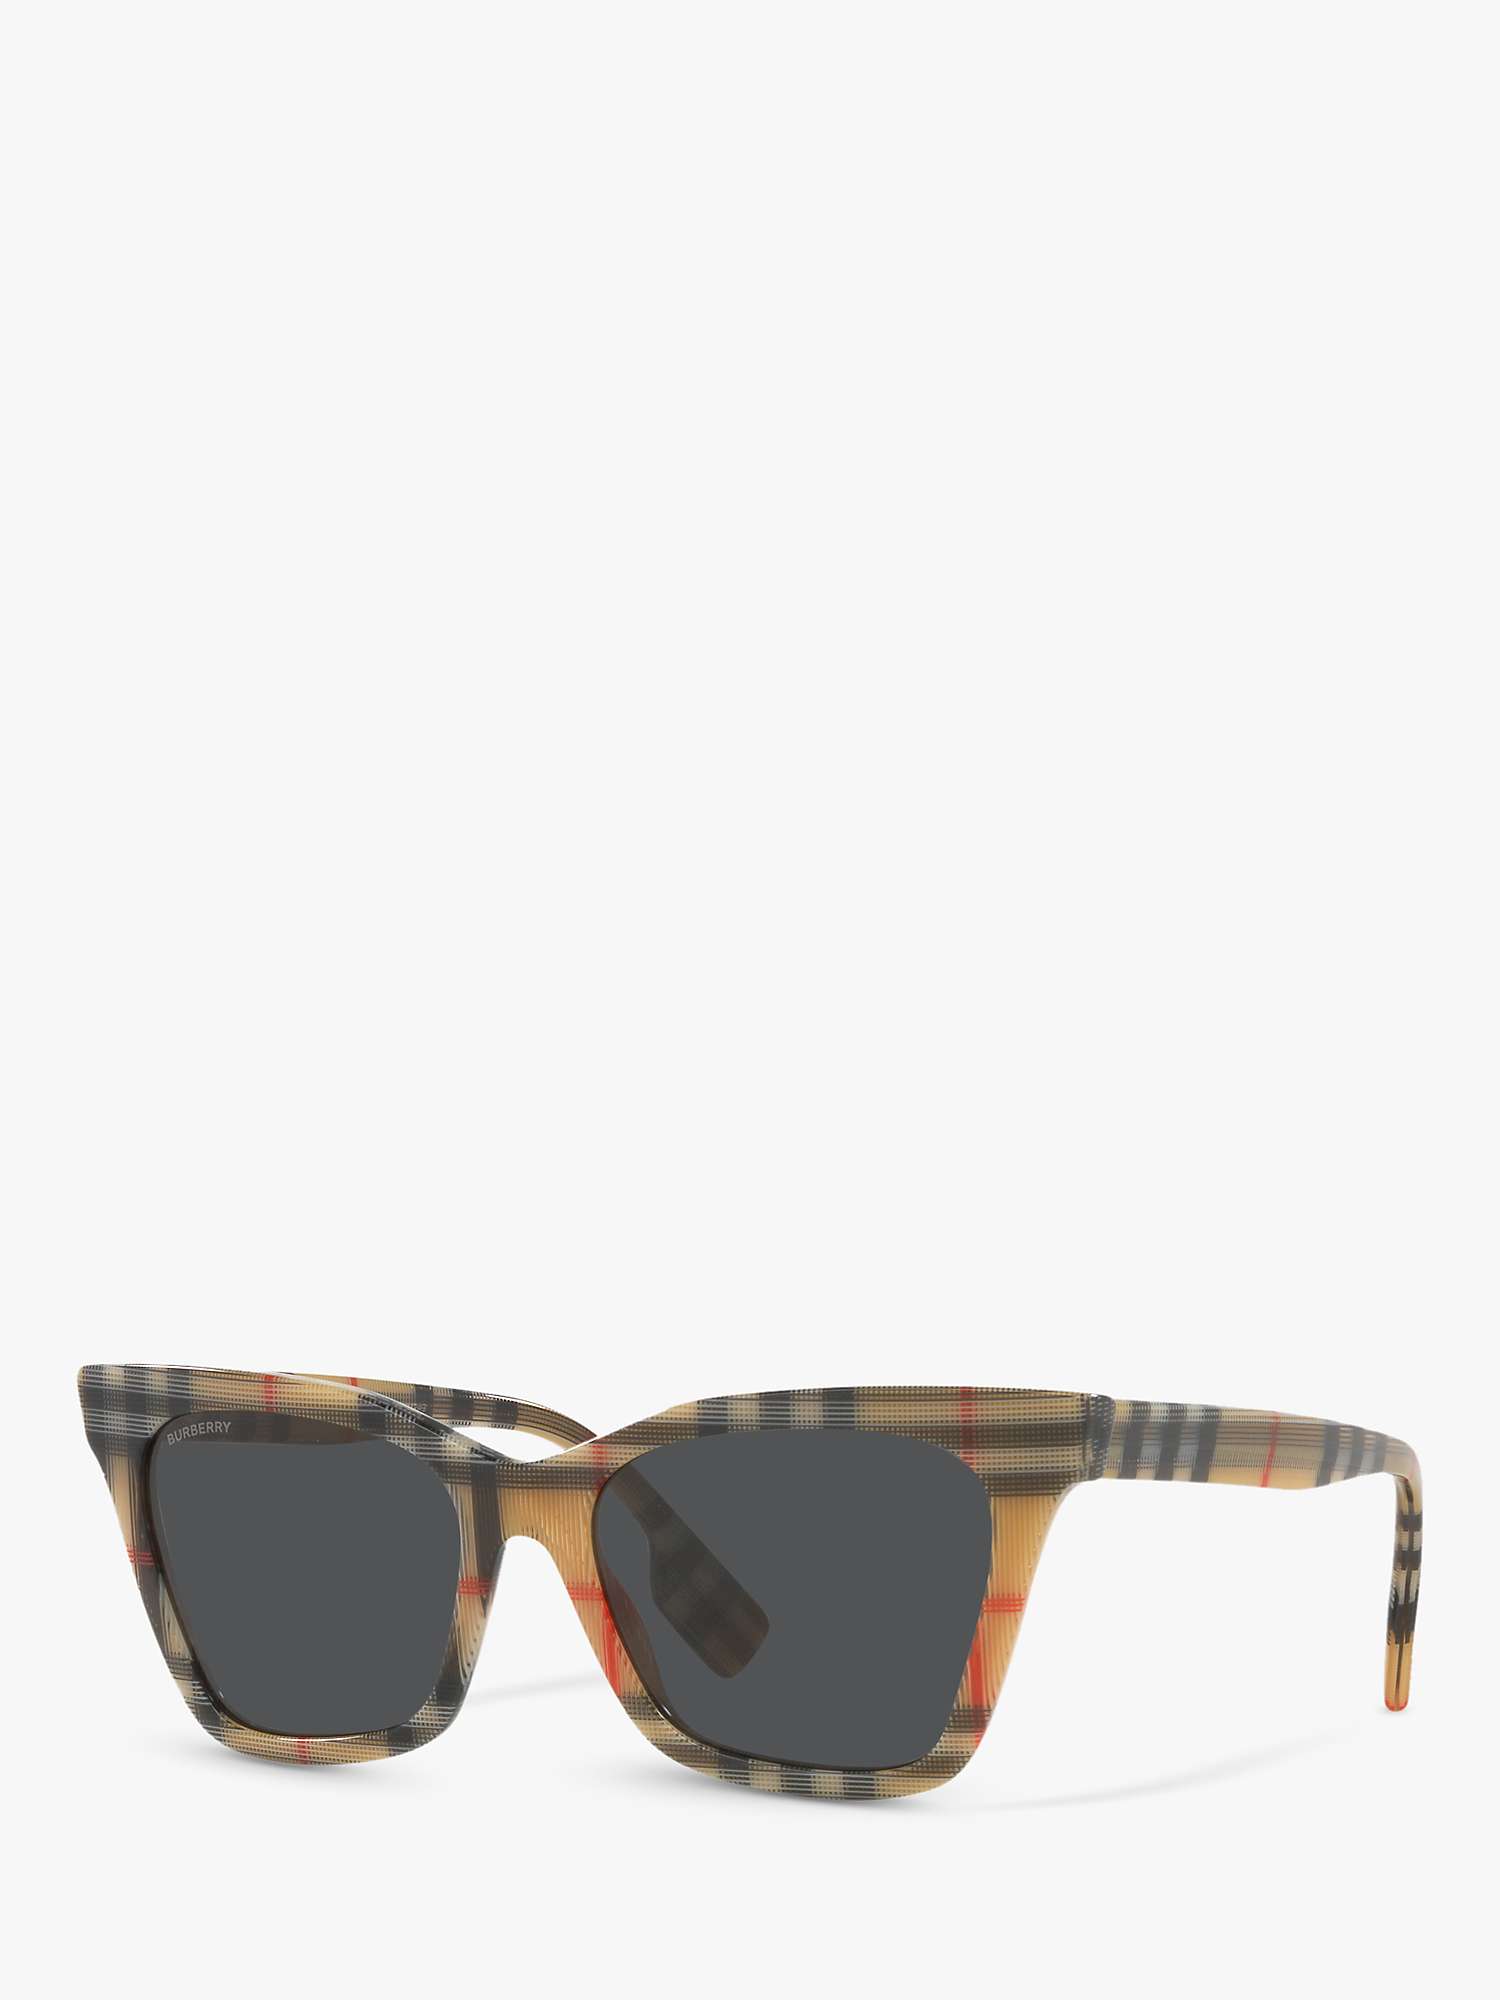 Buy Burberry BE4346 Women's Irregular Sunglasses Online at johnlewis.com